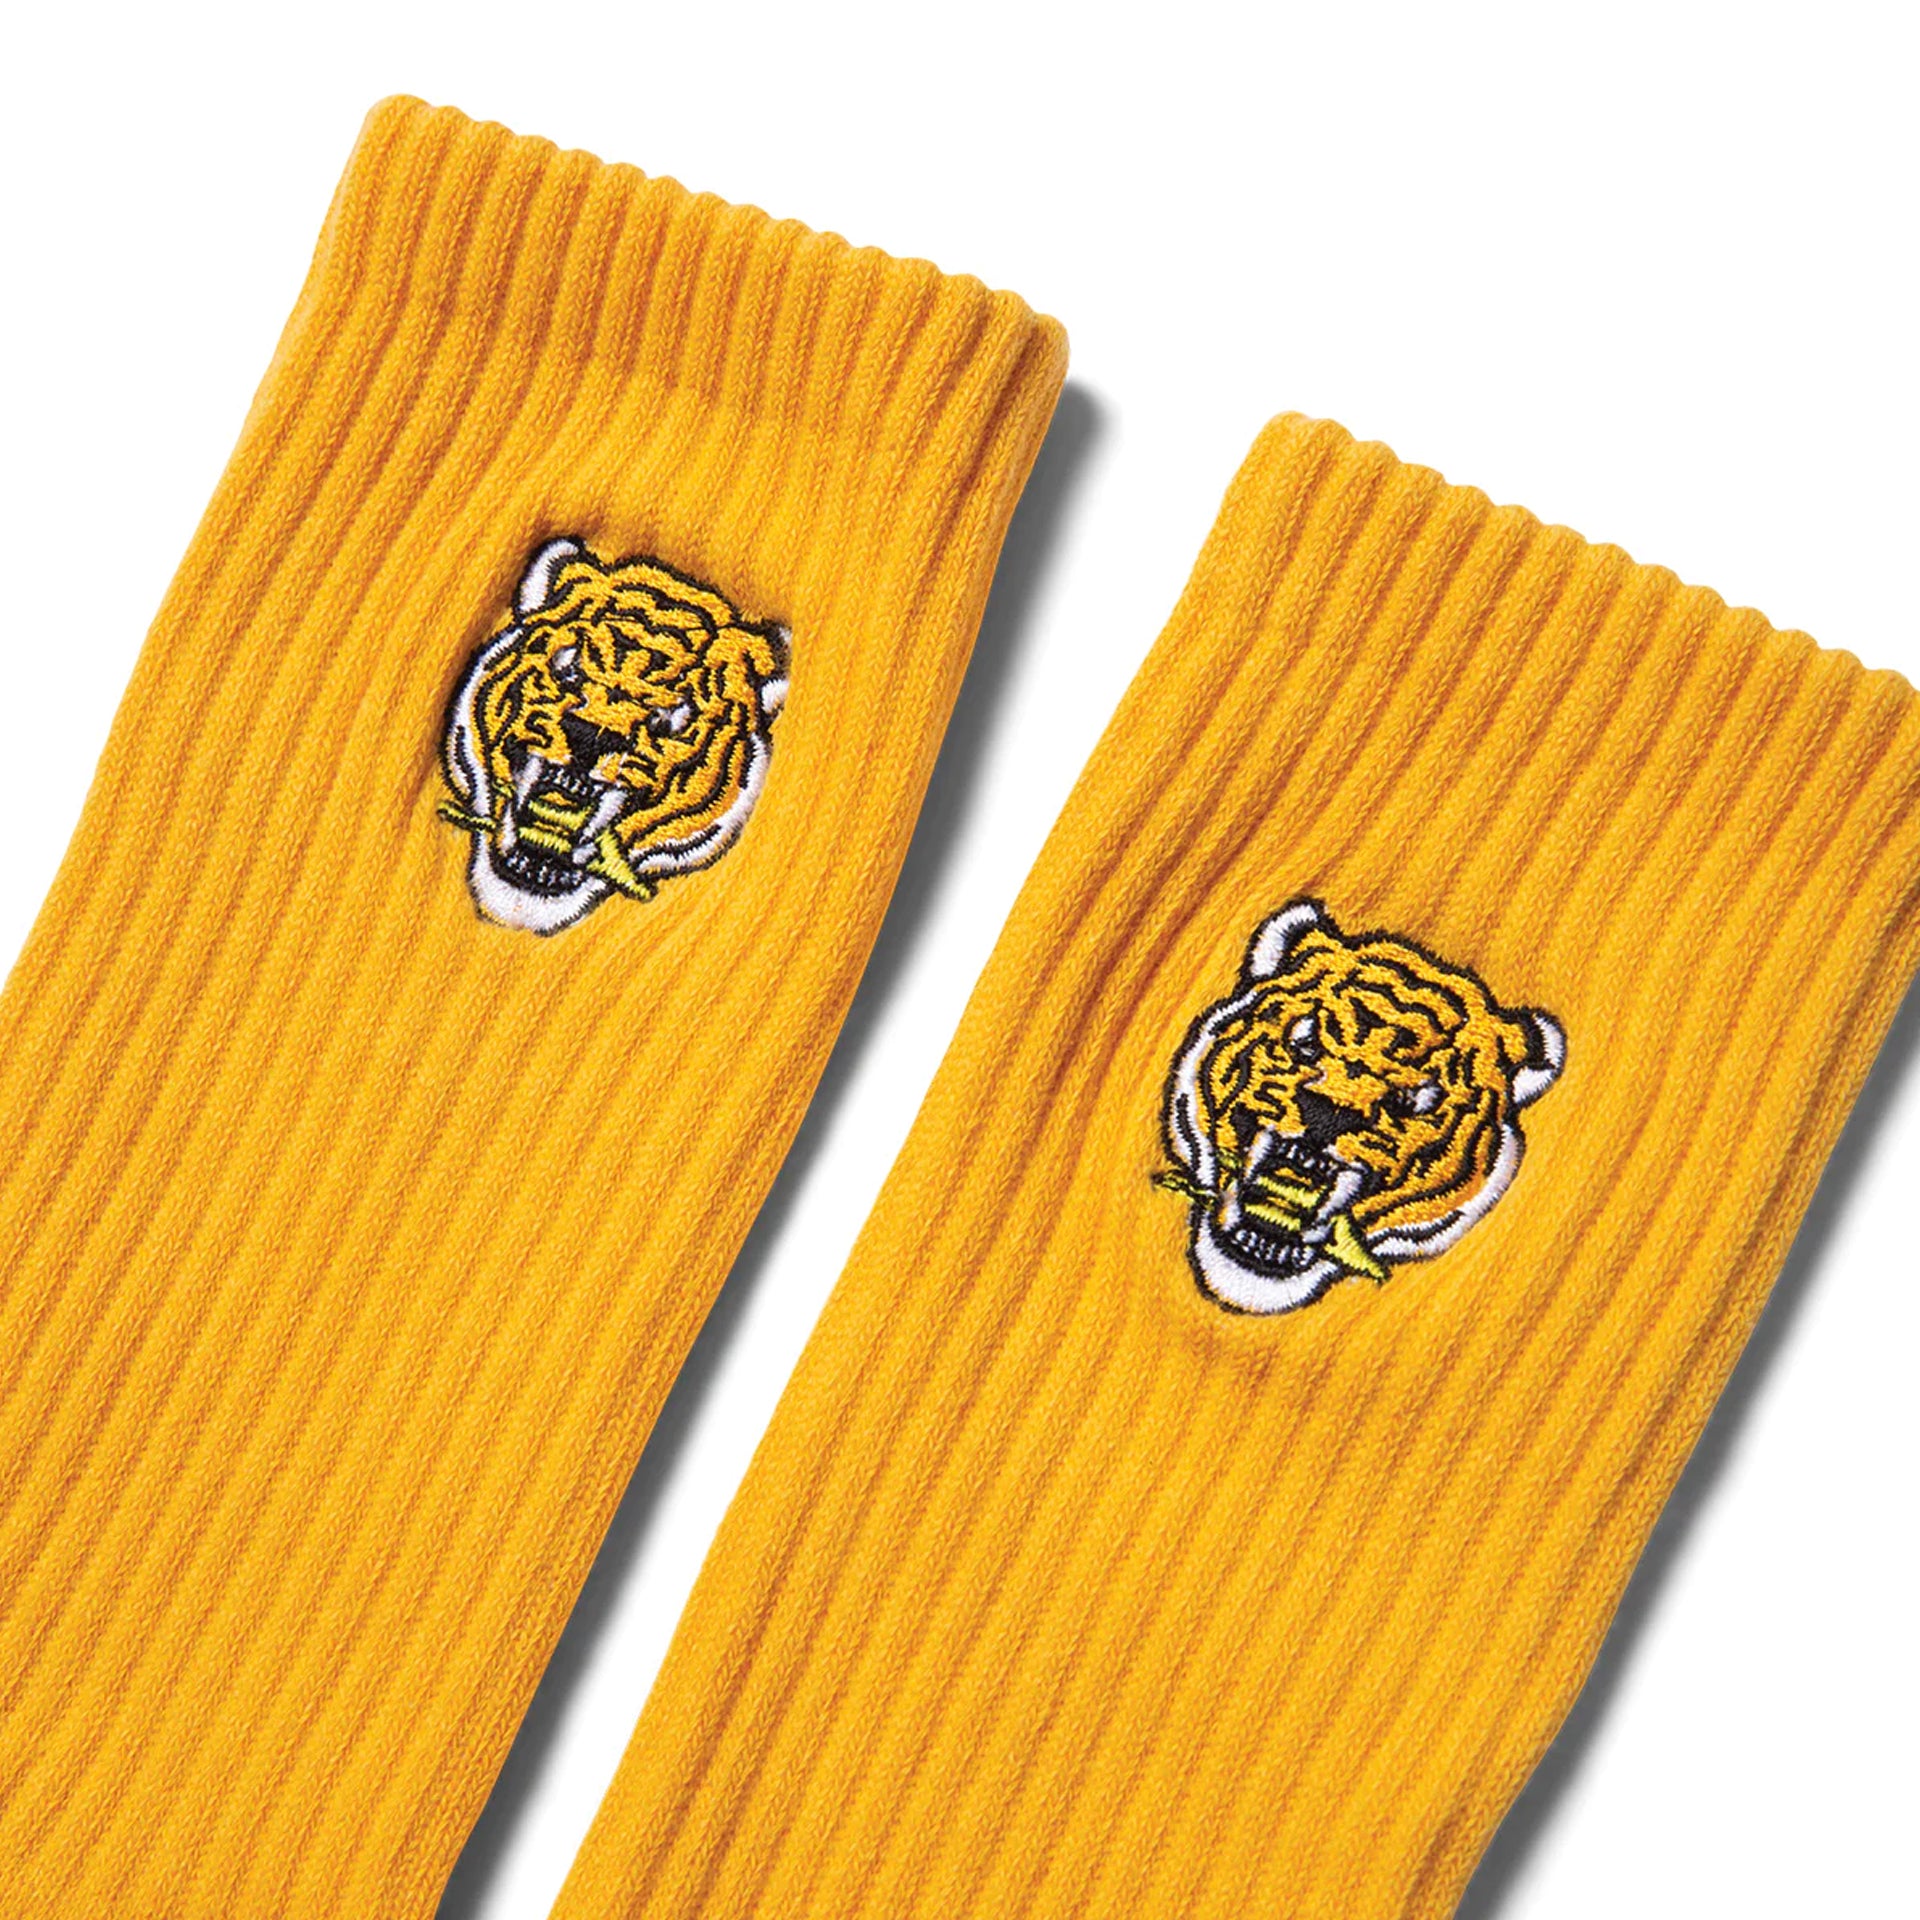 Lakai - Bengle Crew Socks - Yellow - Prime Delux Store